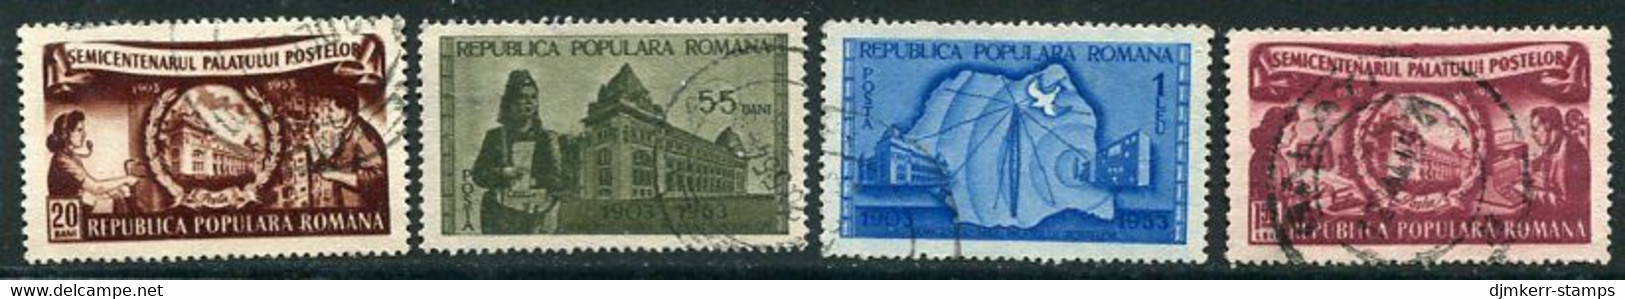 ROMANIA 1953 Post Office Building Used.  Michel 1445-48 - Usati